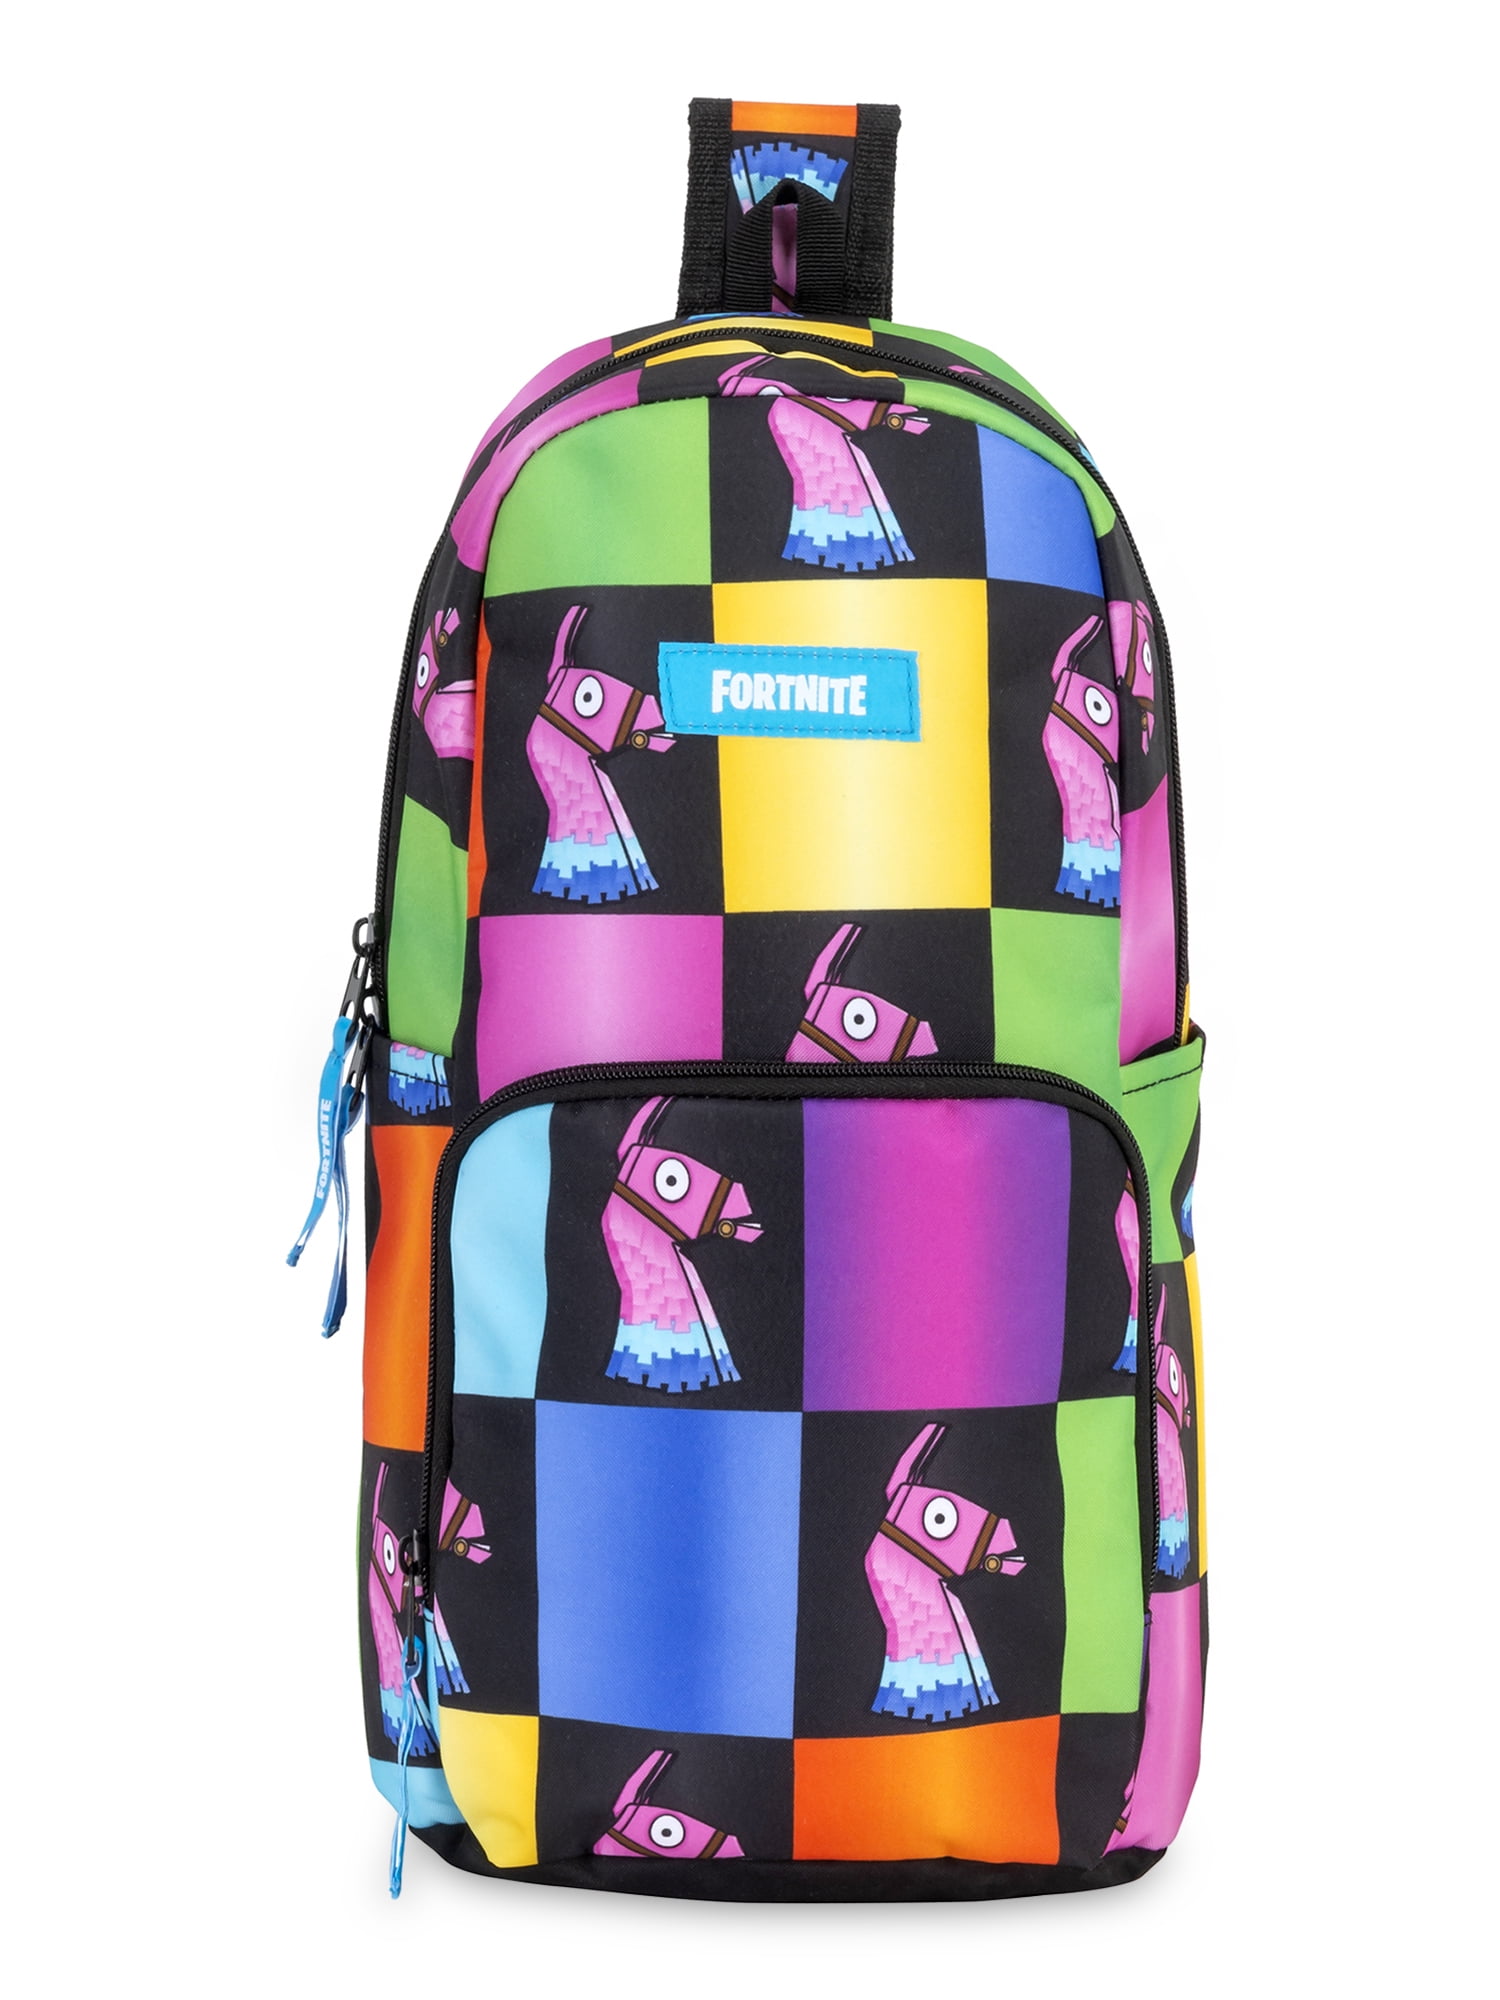 Fortnite Kids Backpack for Boys & Girls, Multi-Character with